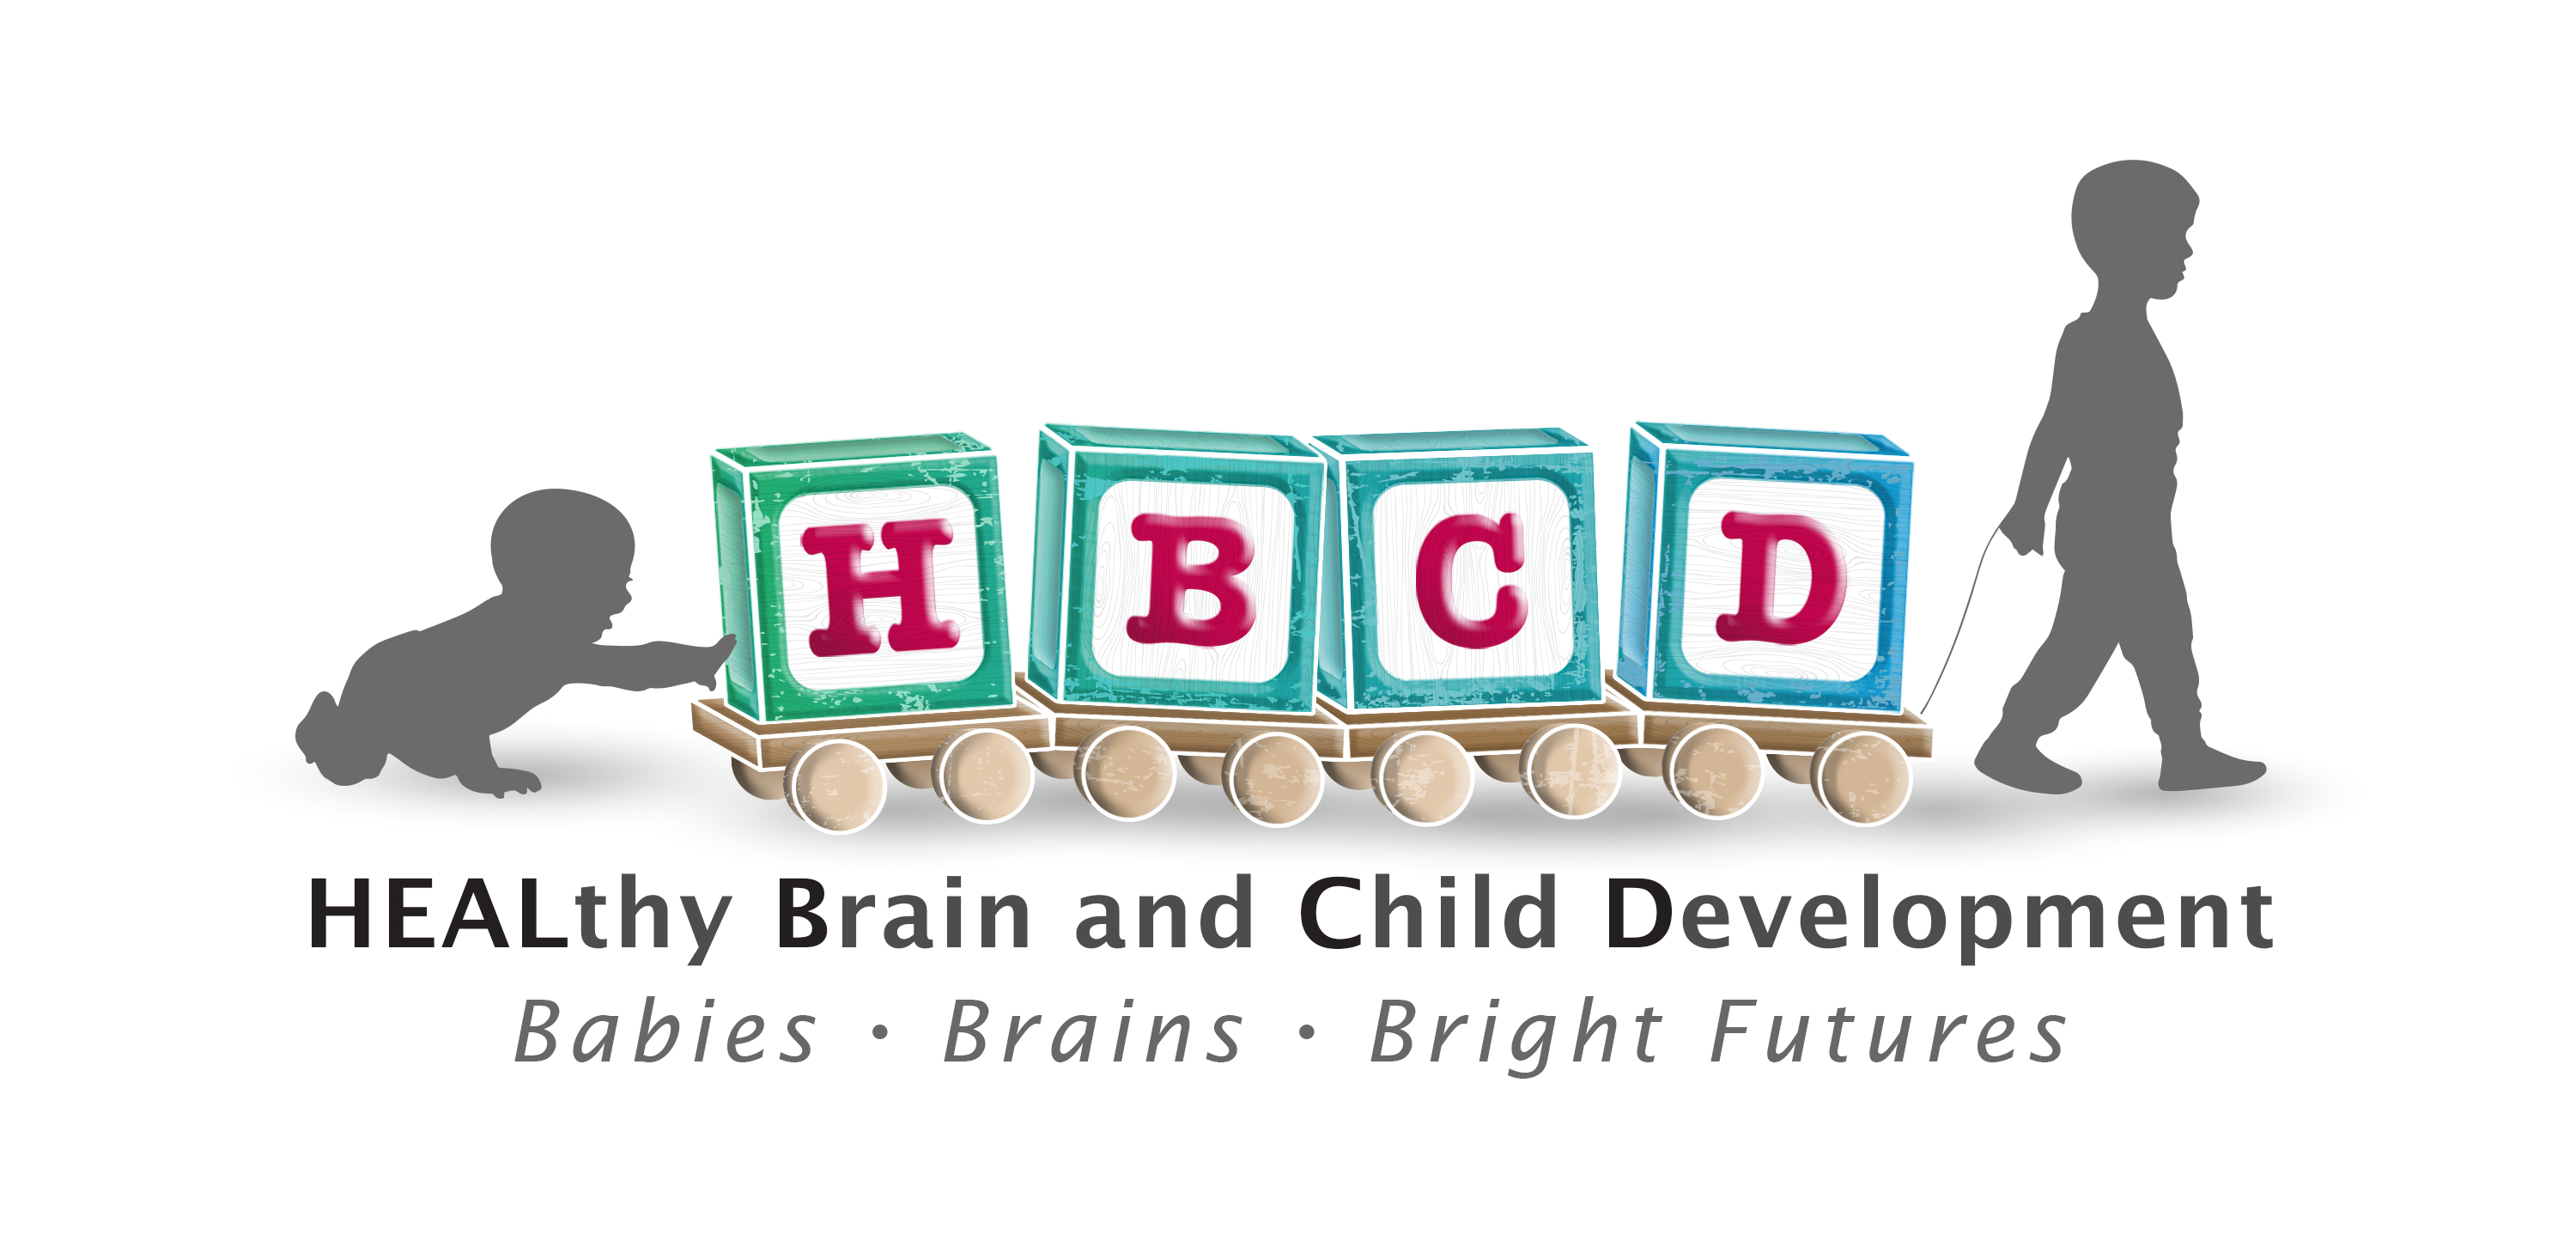 HBCD Study Logo: HEALthy Brain and Child Development. Babies - Brains - Bright Futures